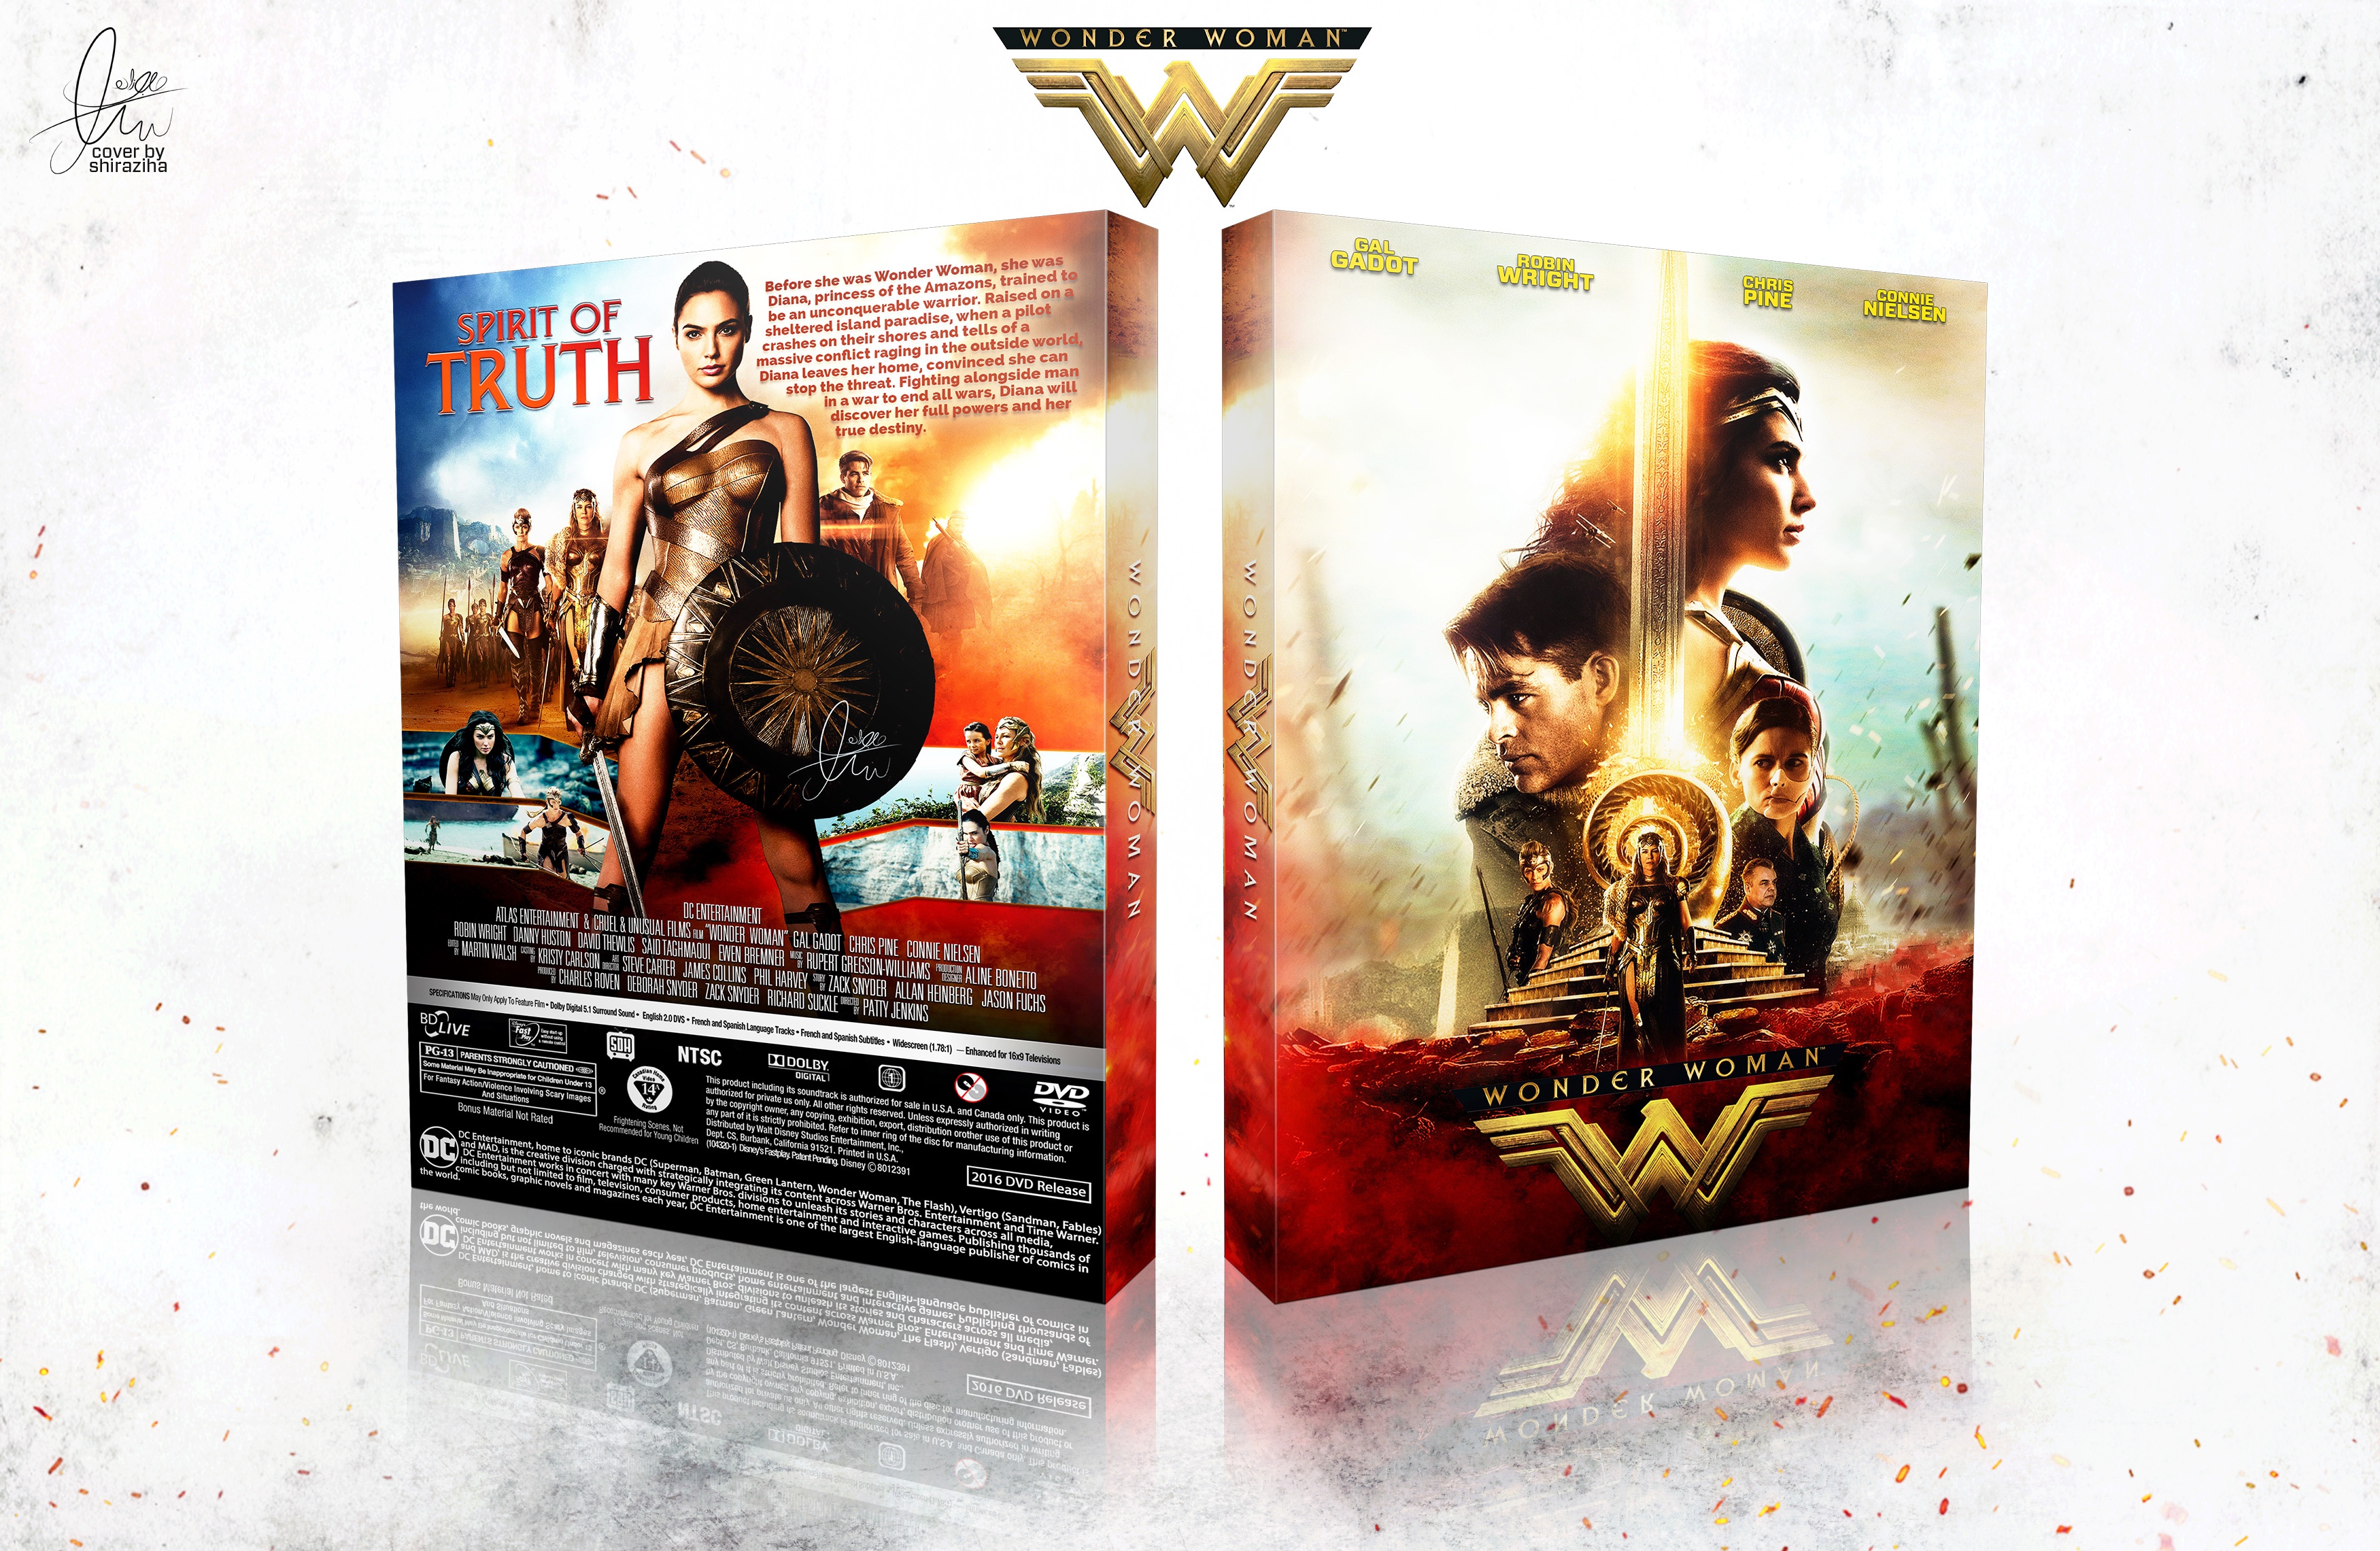 Wonder Woman box cover